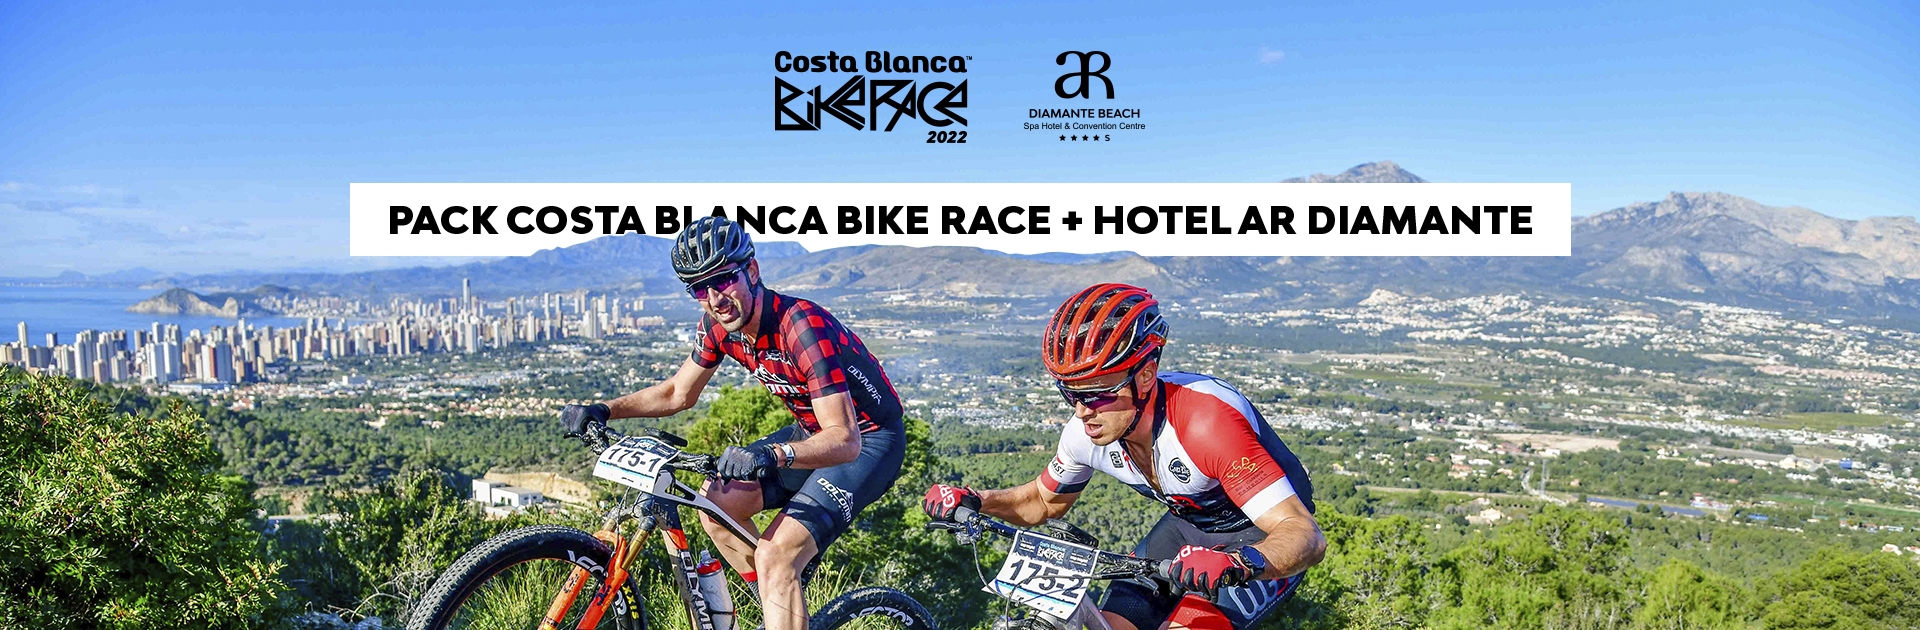 Pack Costa Blanca Bike Race + Hotel AR Diamante